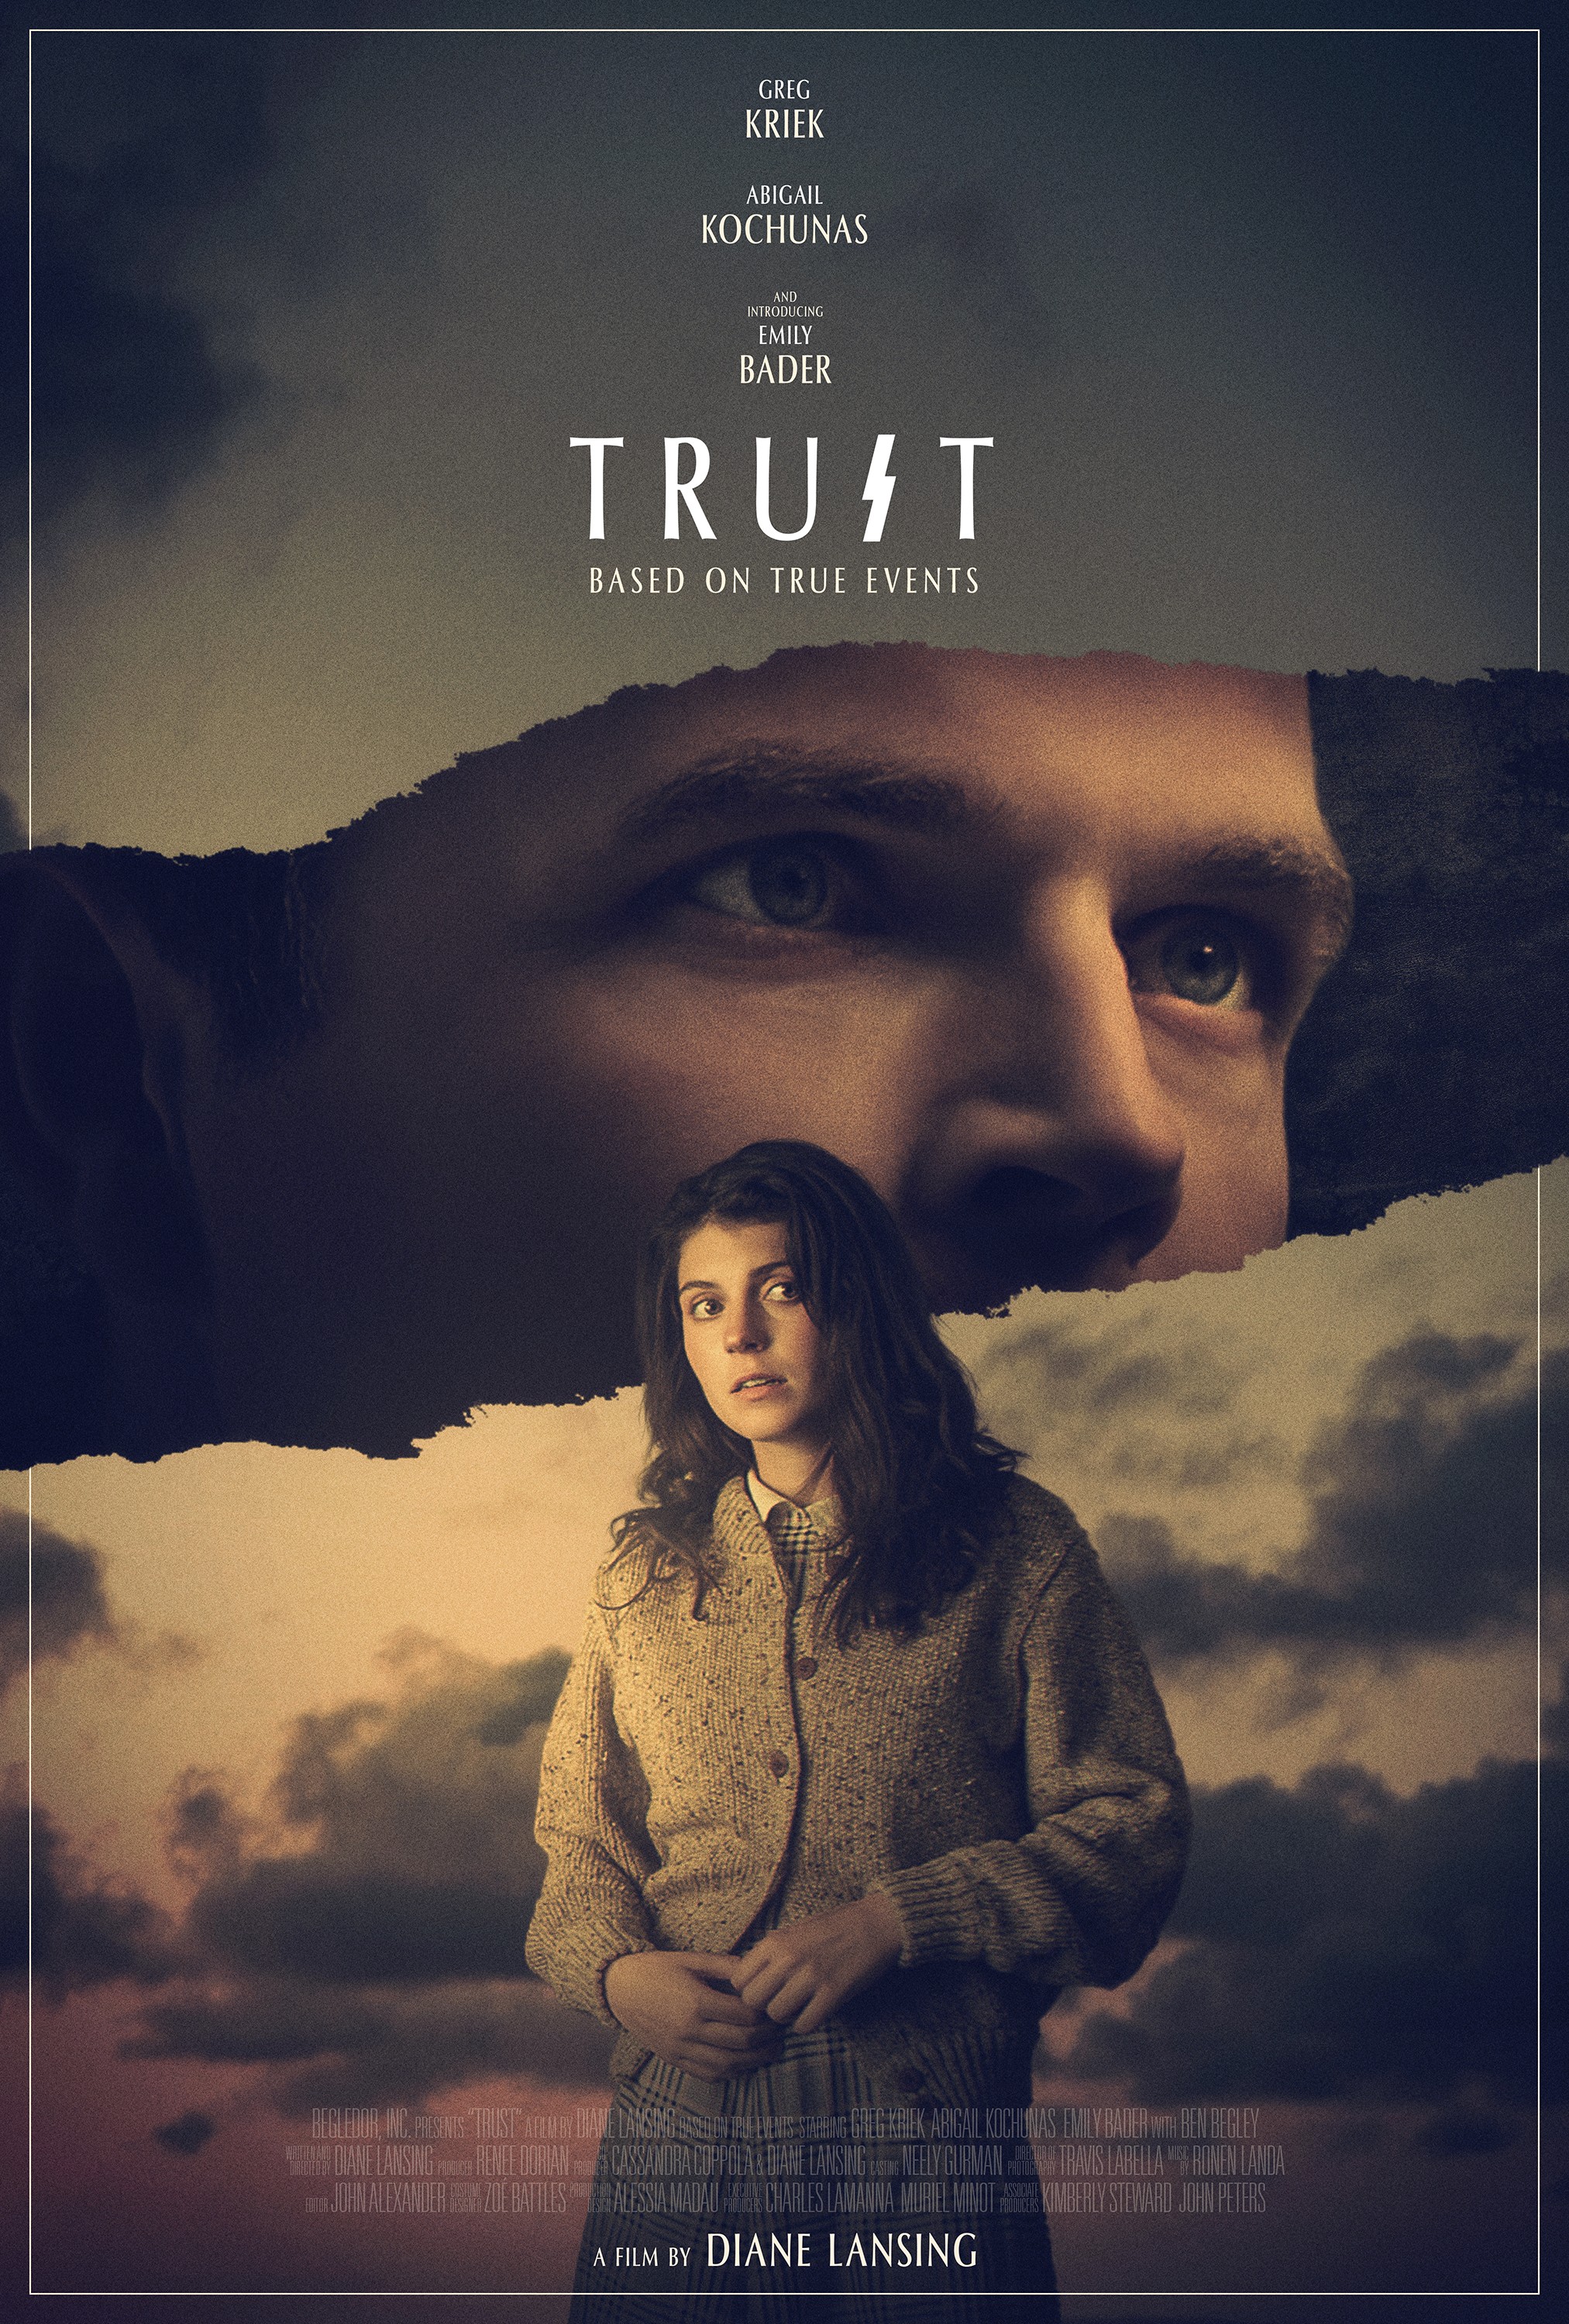 Mega Sized Movie Poster Image for Trust